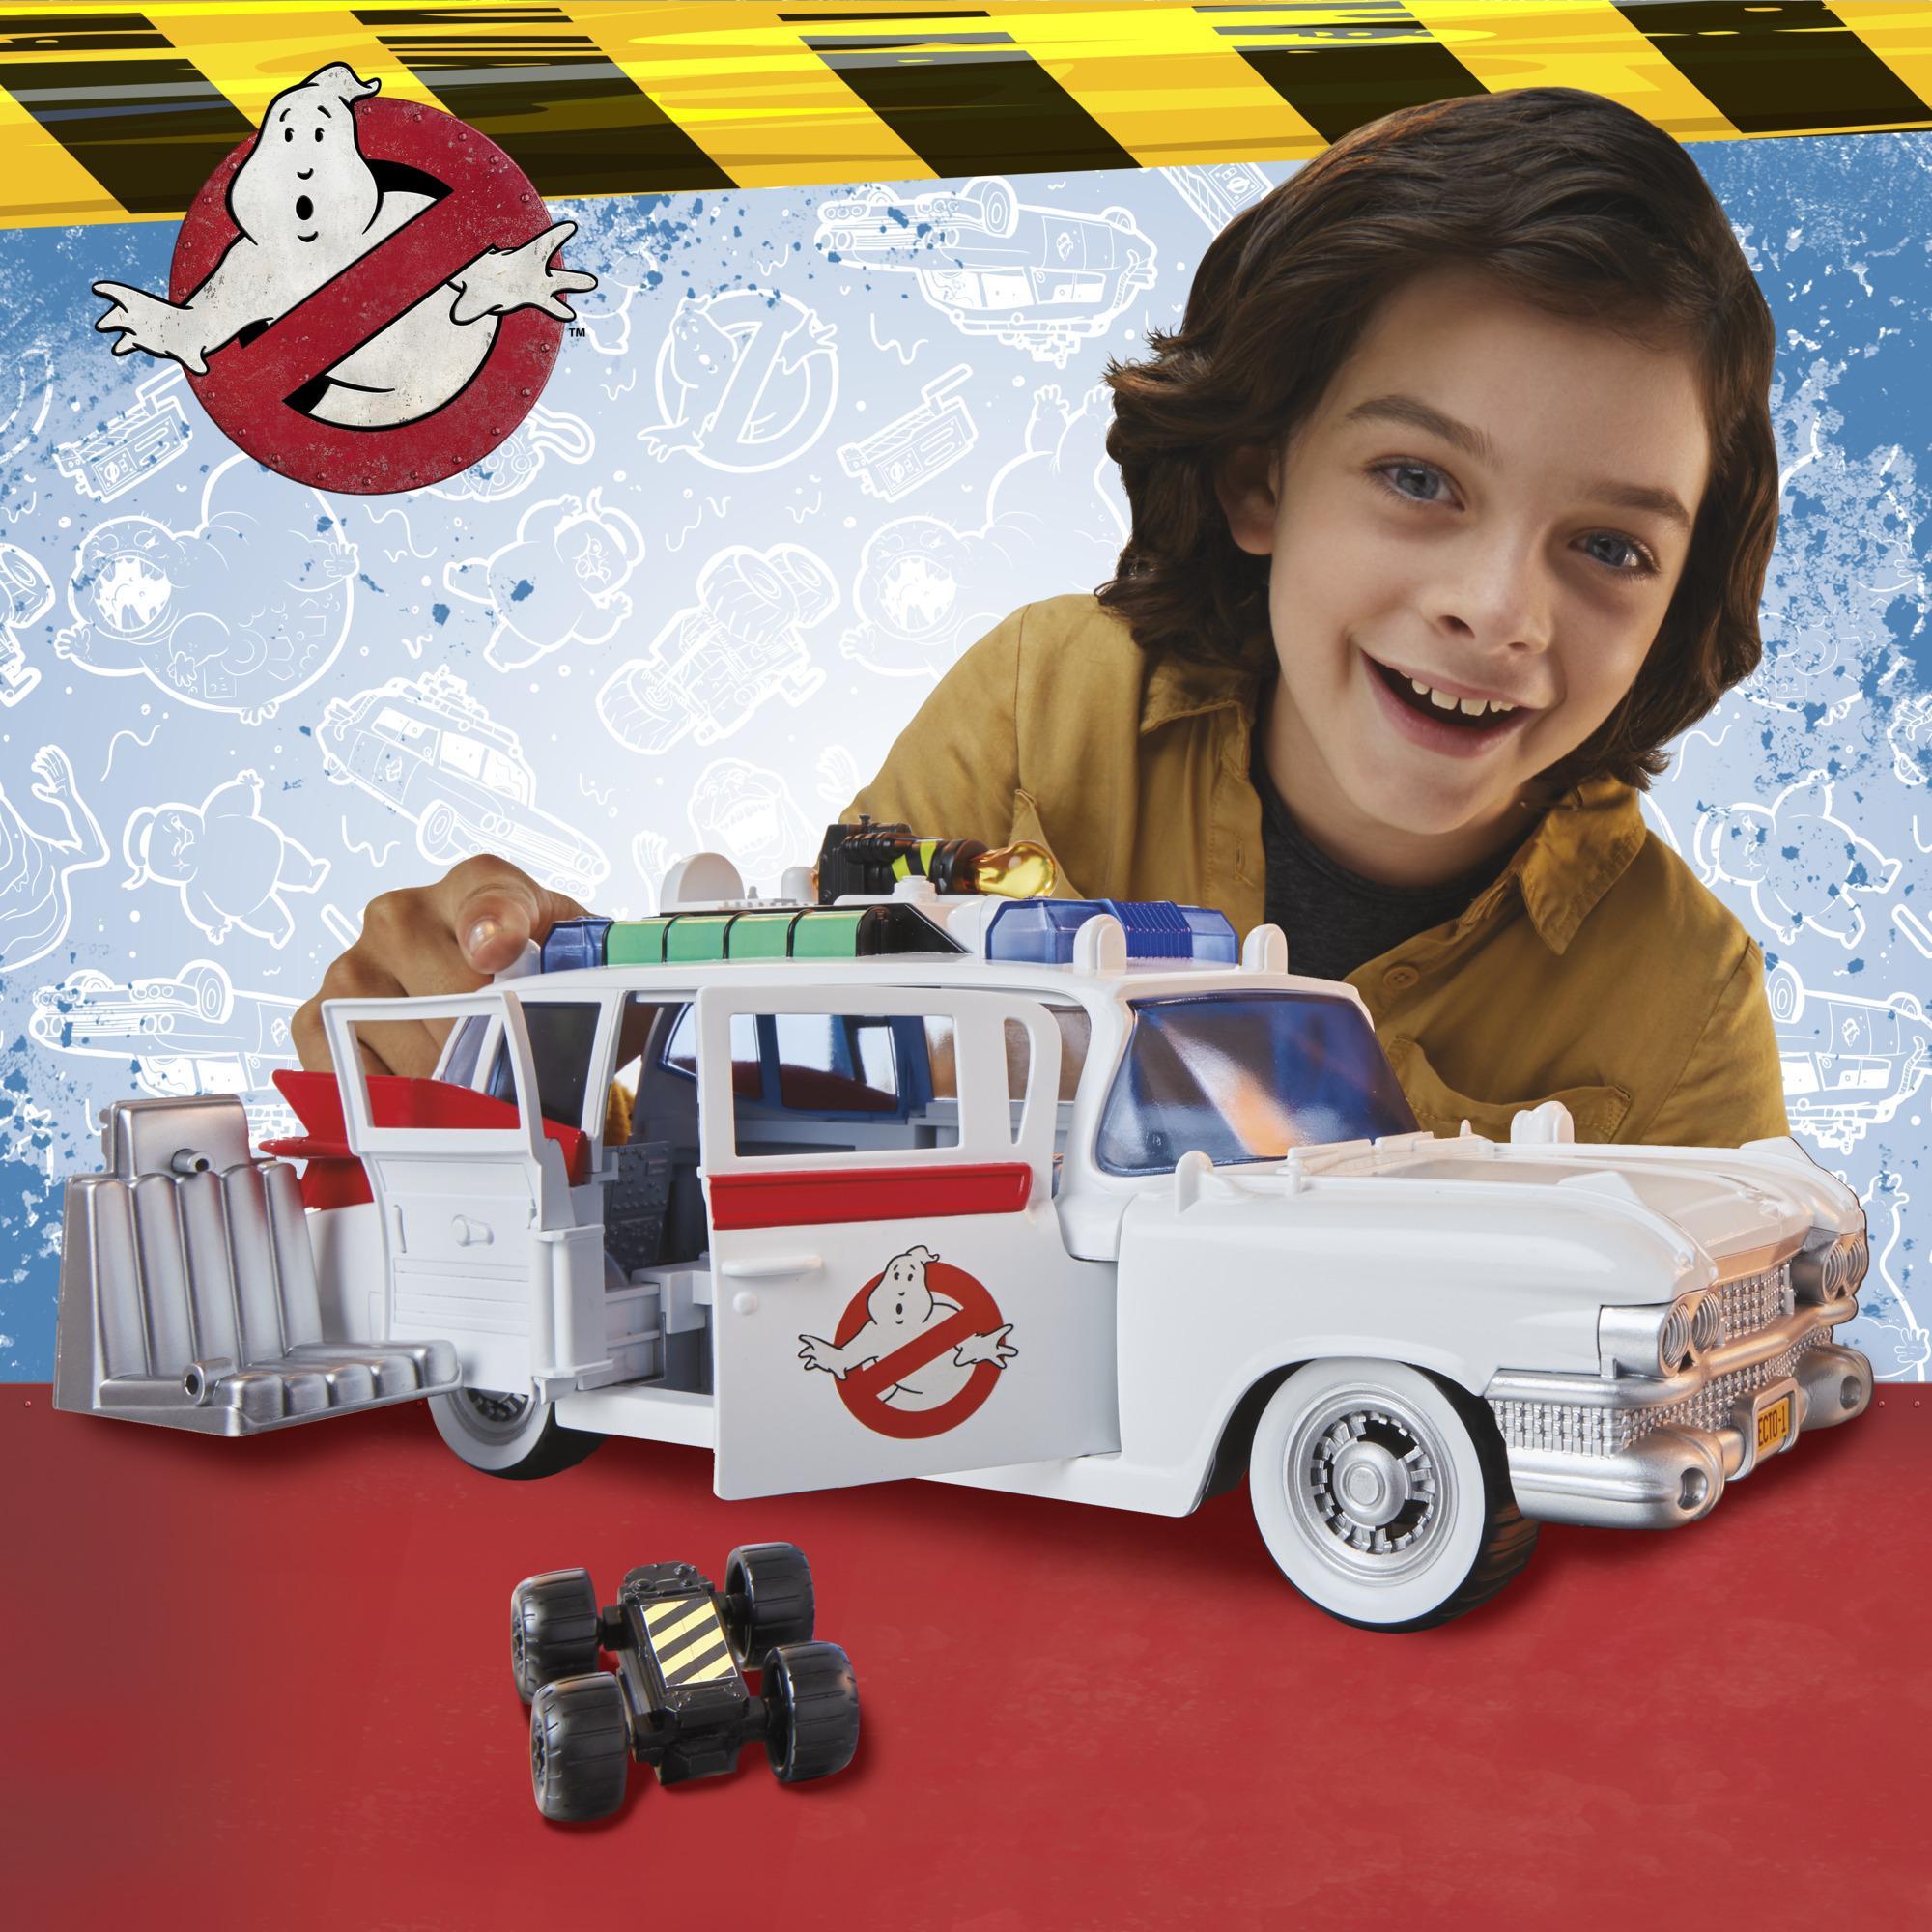 Ghostbusters Ecto-1 Fahrzeug product thumbnail 1